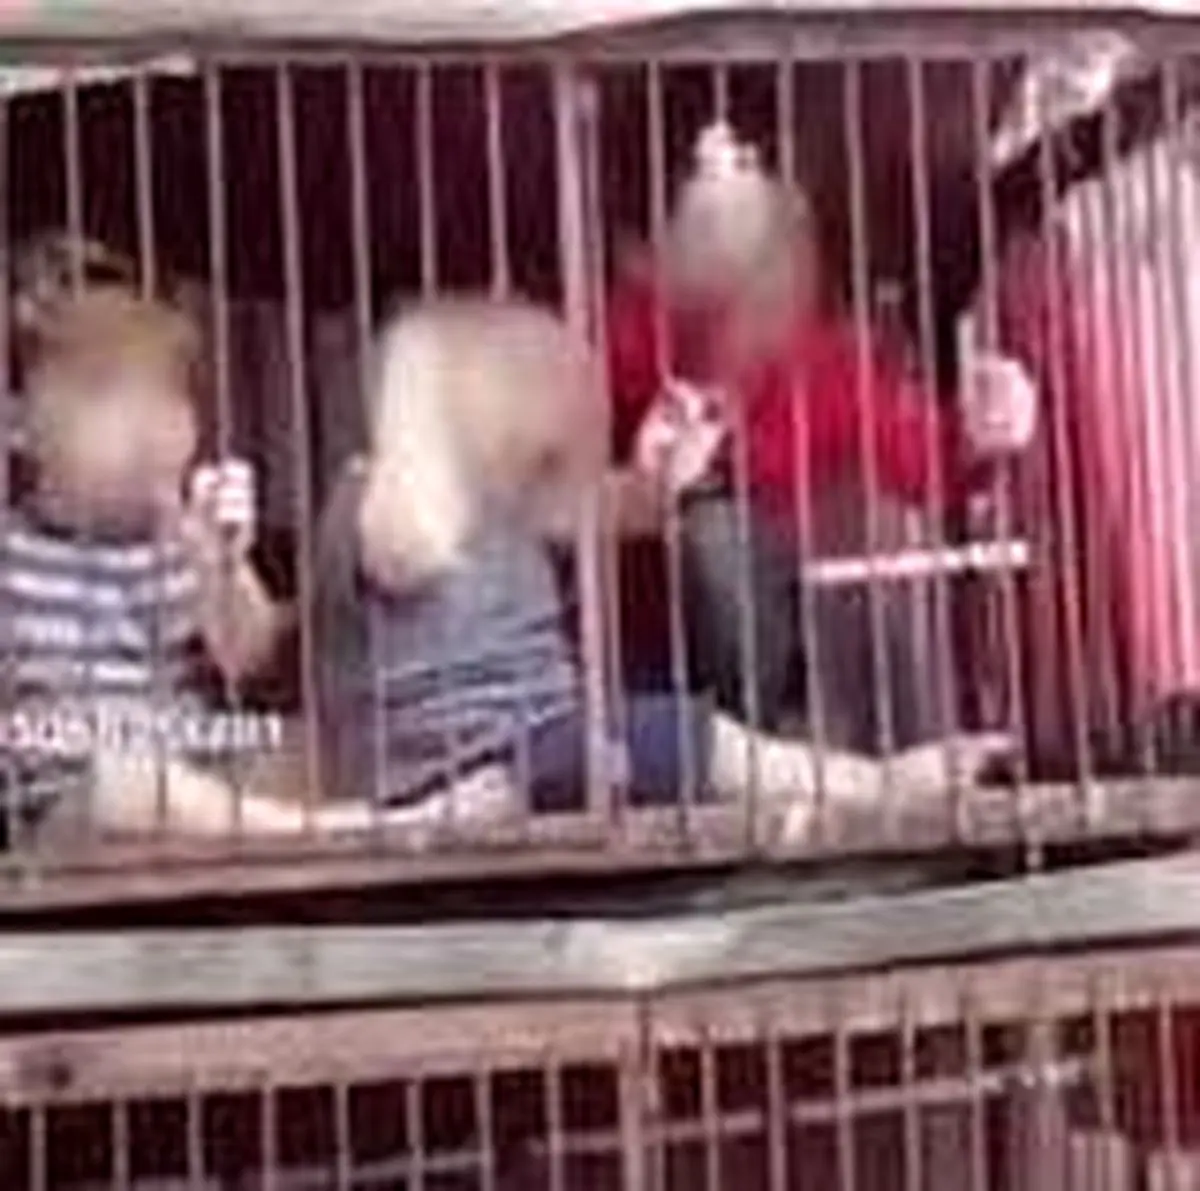 تلویزیون فرانسه دست صهیونیست‌ها را رو کرد! | ویدئو کودکان اسیر اسرائیلی فیک است +ویدئو